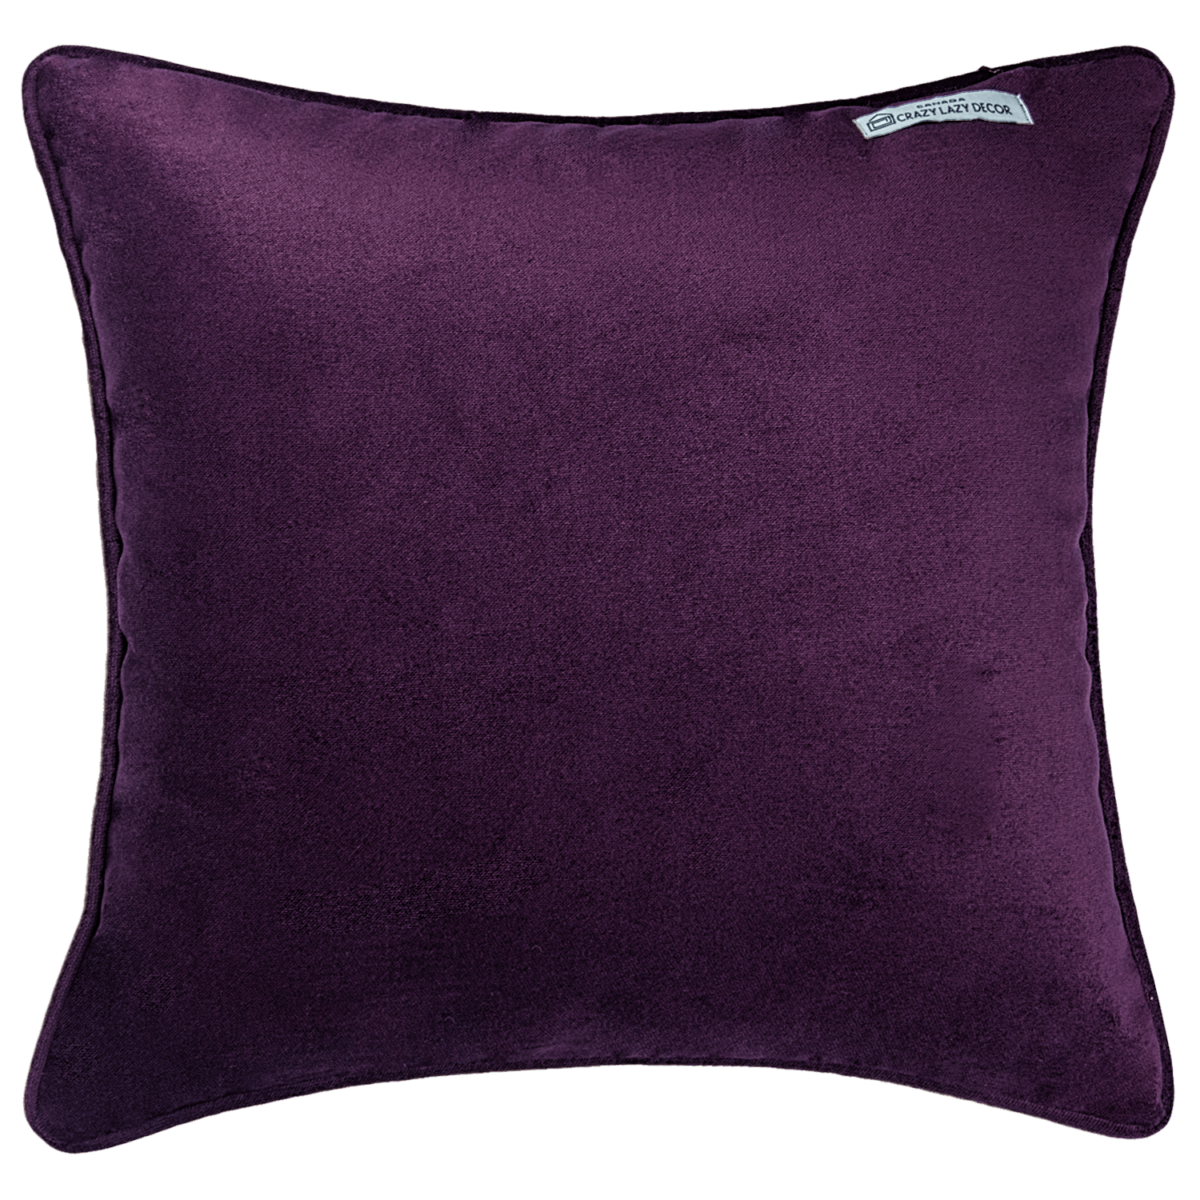 Plum burgundy velvet plain cushion covers throw